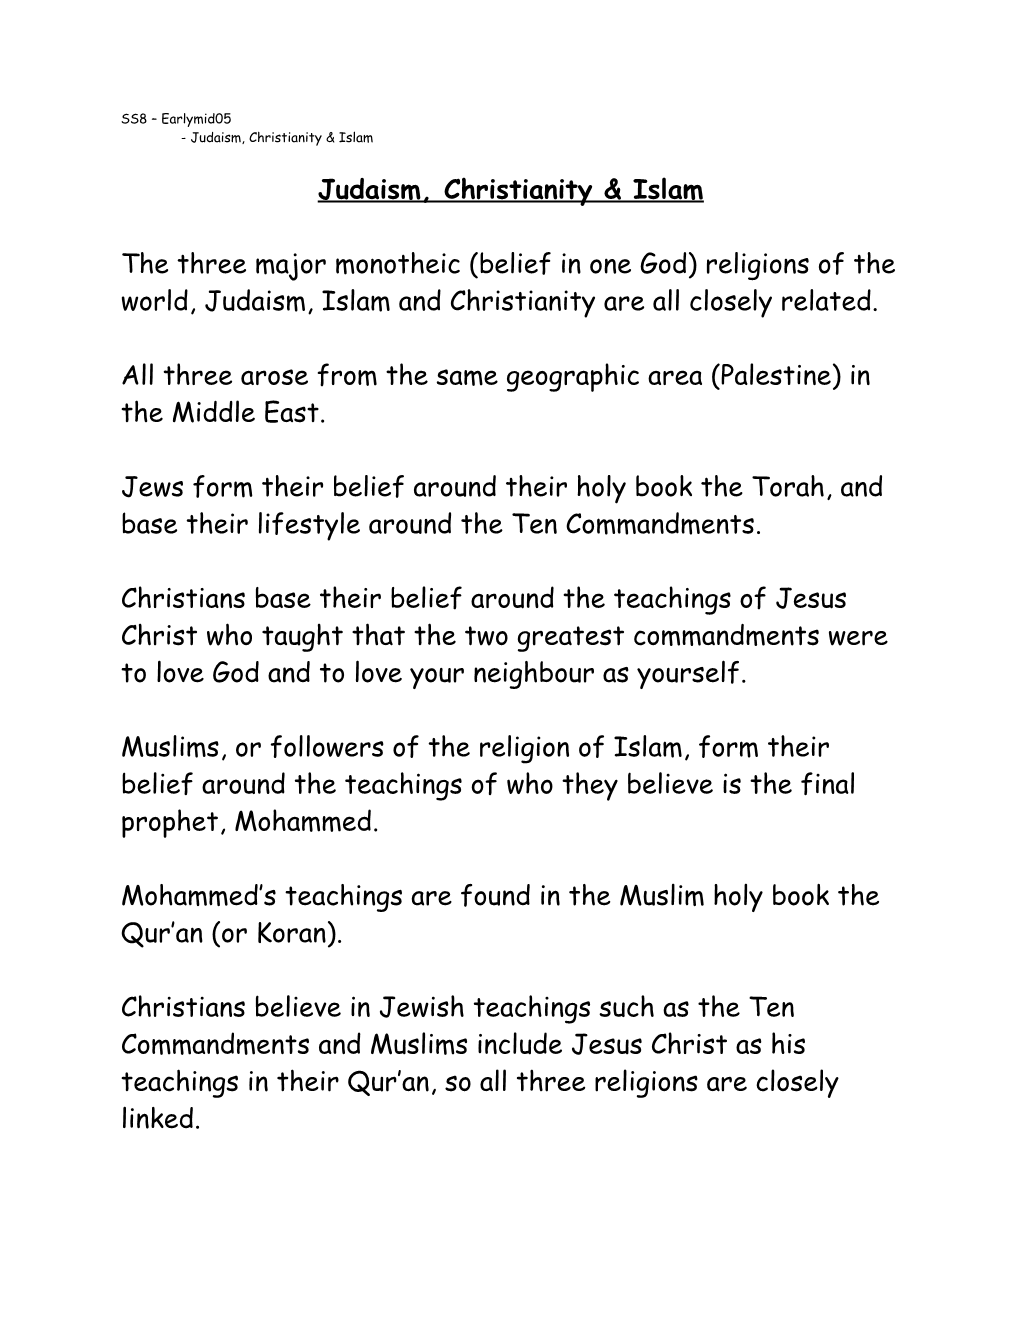 Judaism, Christianity & Islam